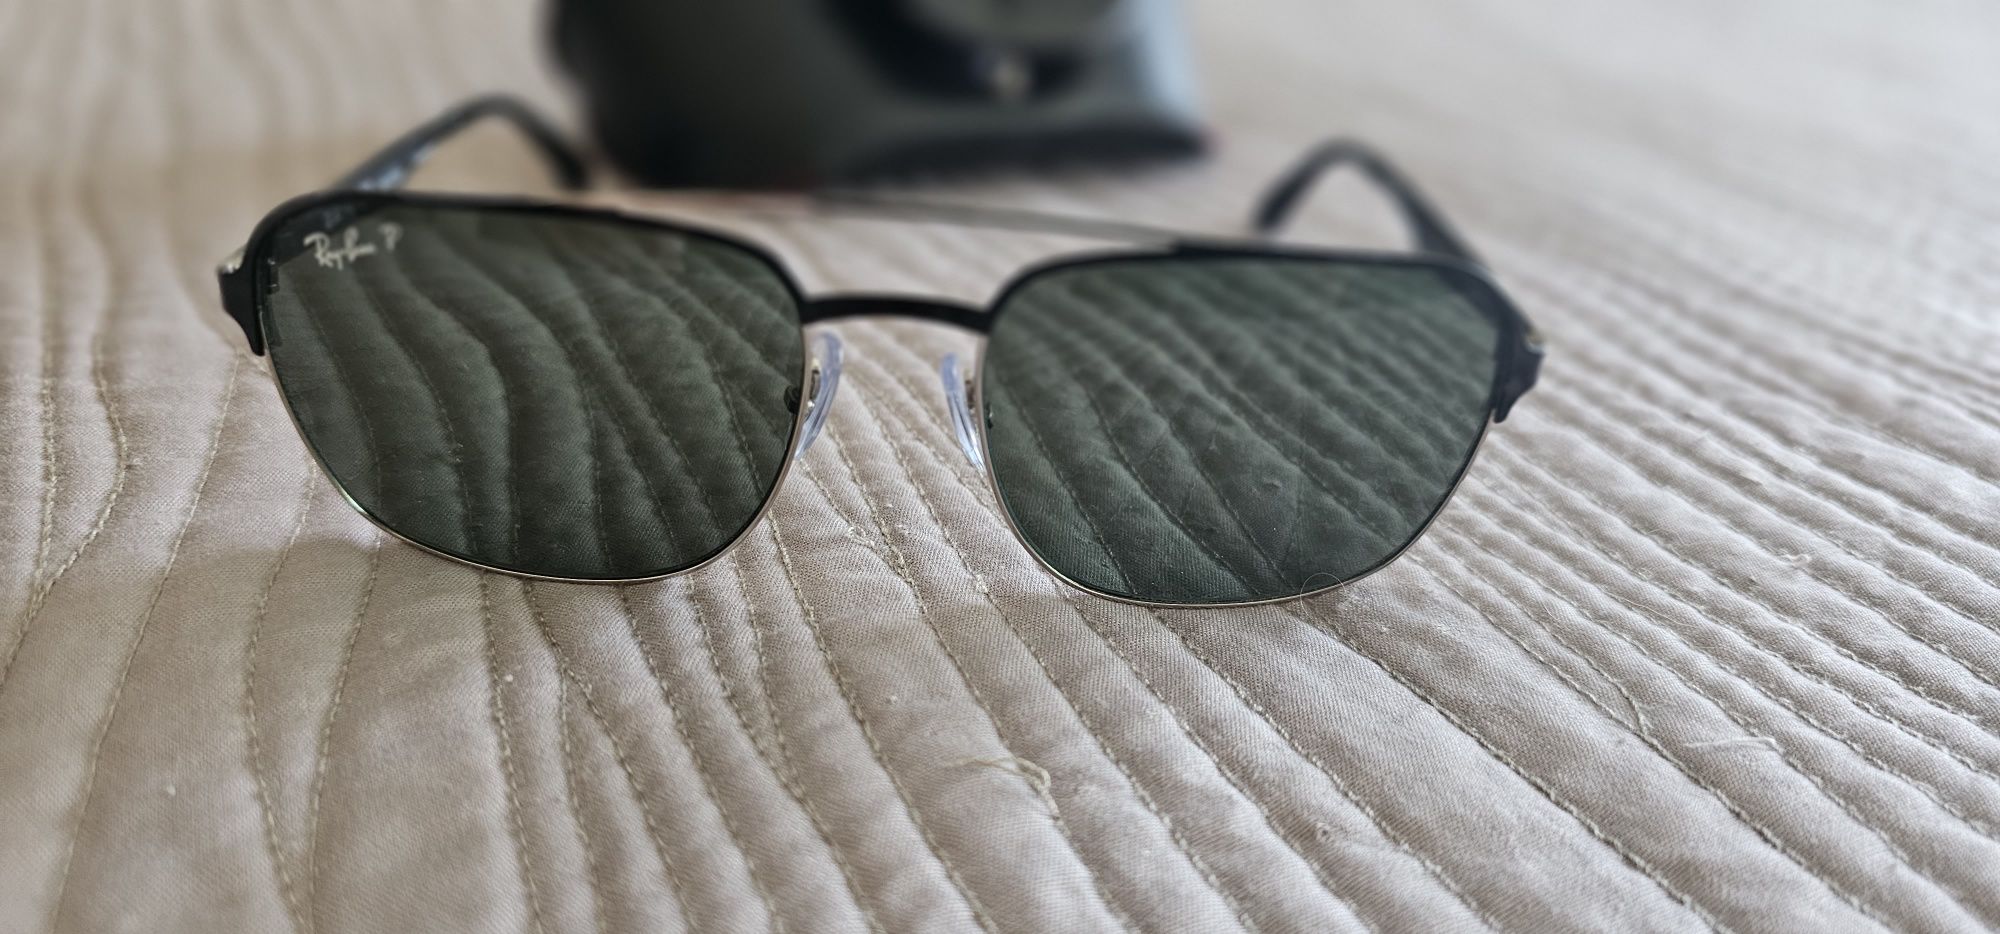 Vendo óculos sol polarizados RAY-BAN sem riscos e originais